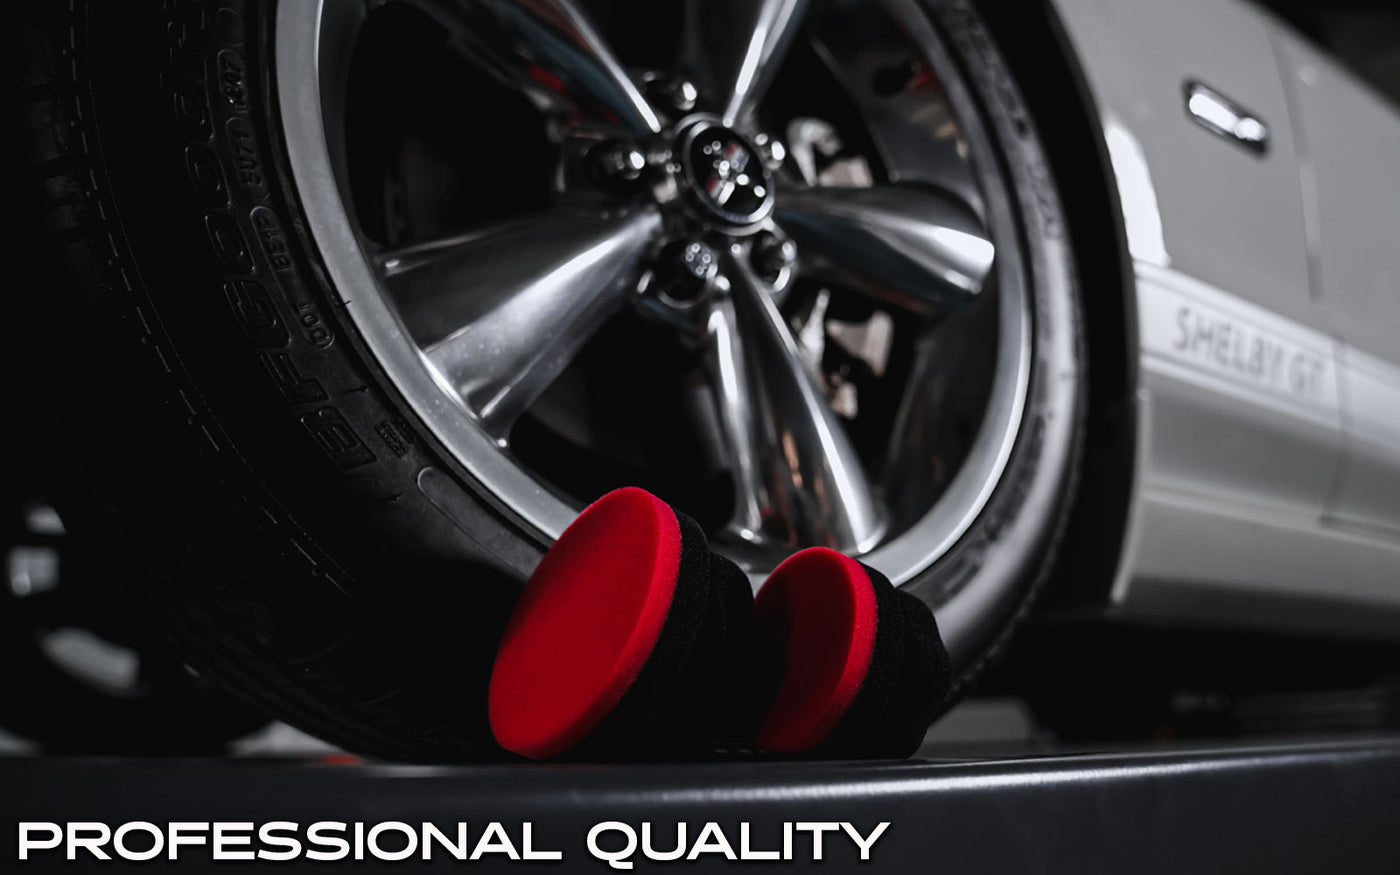 6X Tire Dressing Applicator Pads Gloss Shine Protectant Wheel Car Contour  Sponge